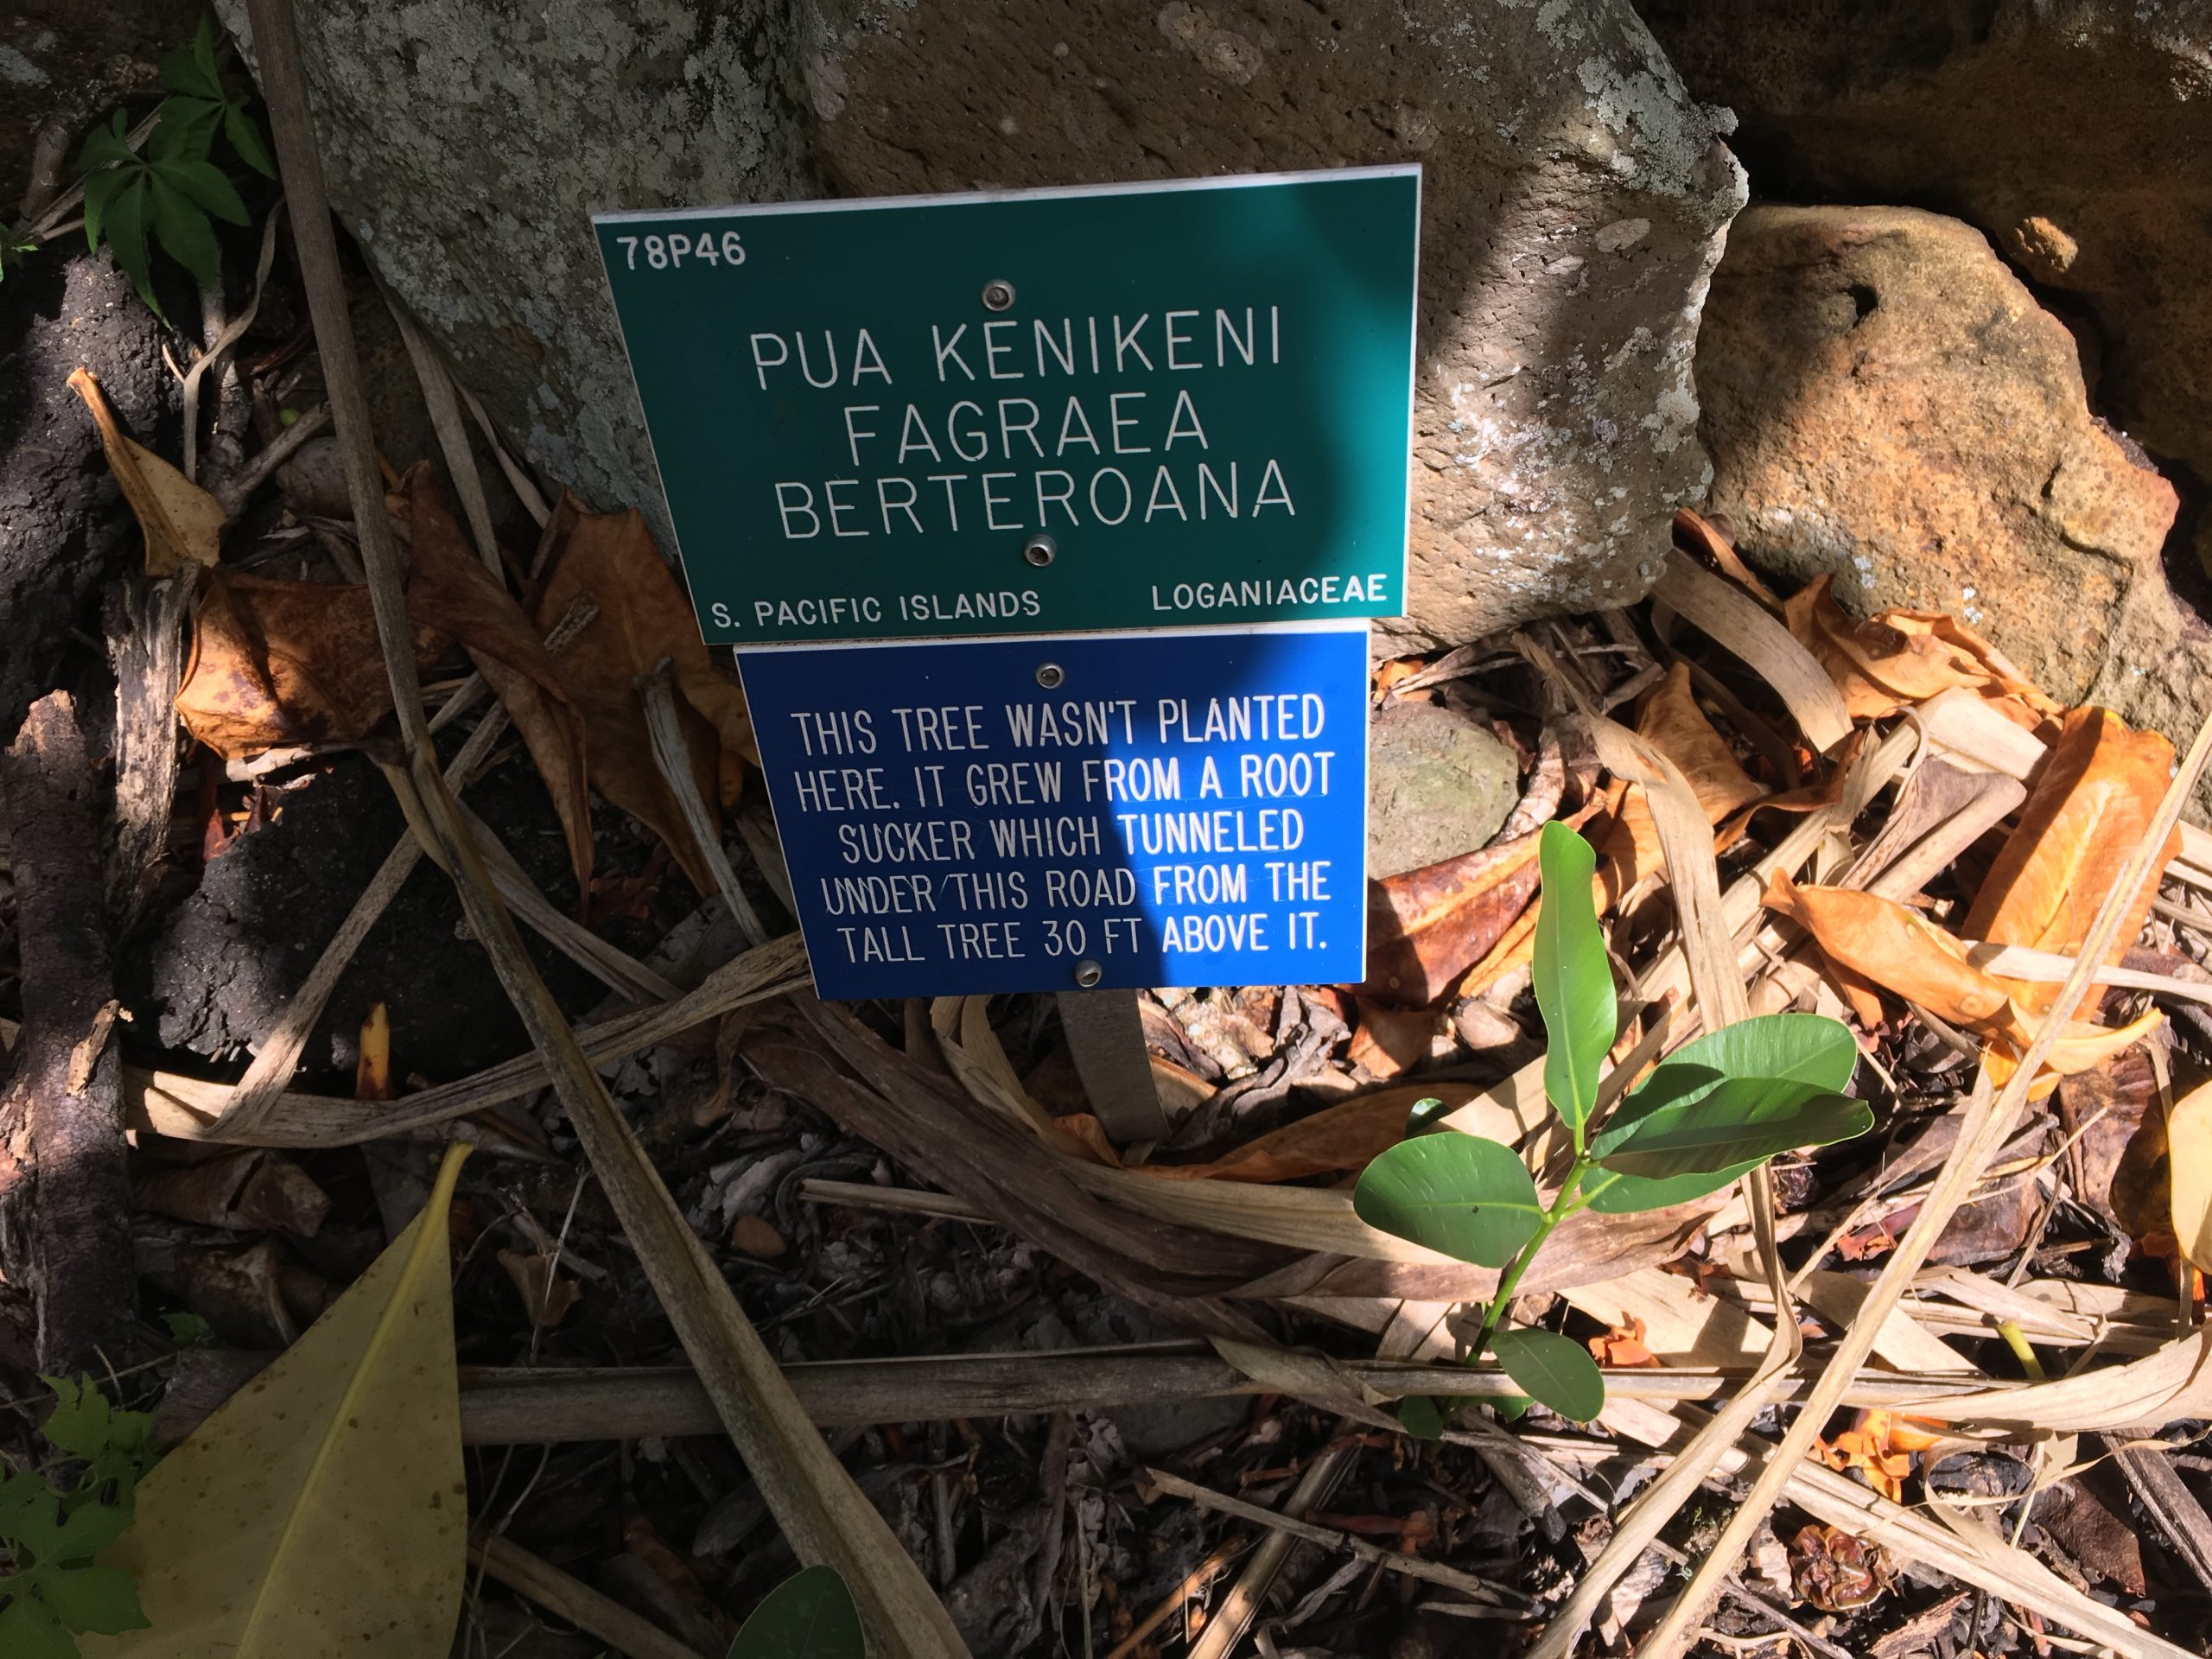 Image of Pua kenikeni fagraea berteroana tree.